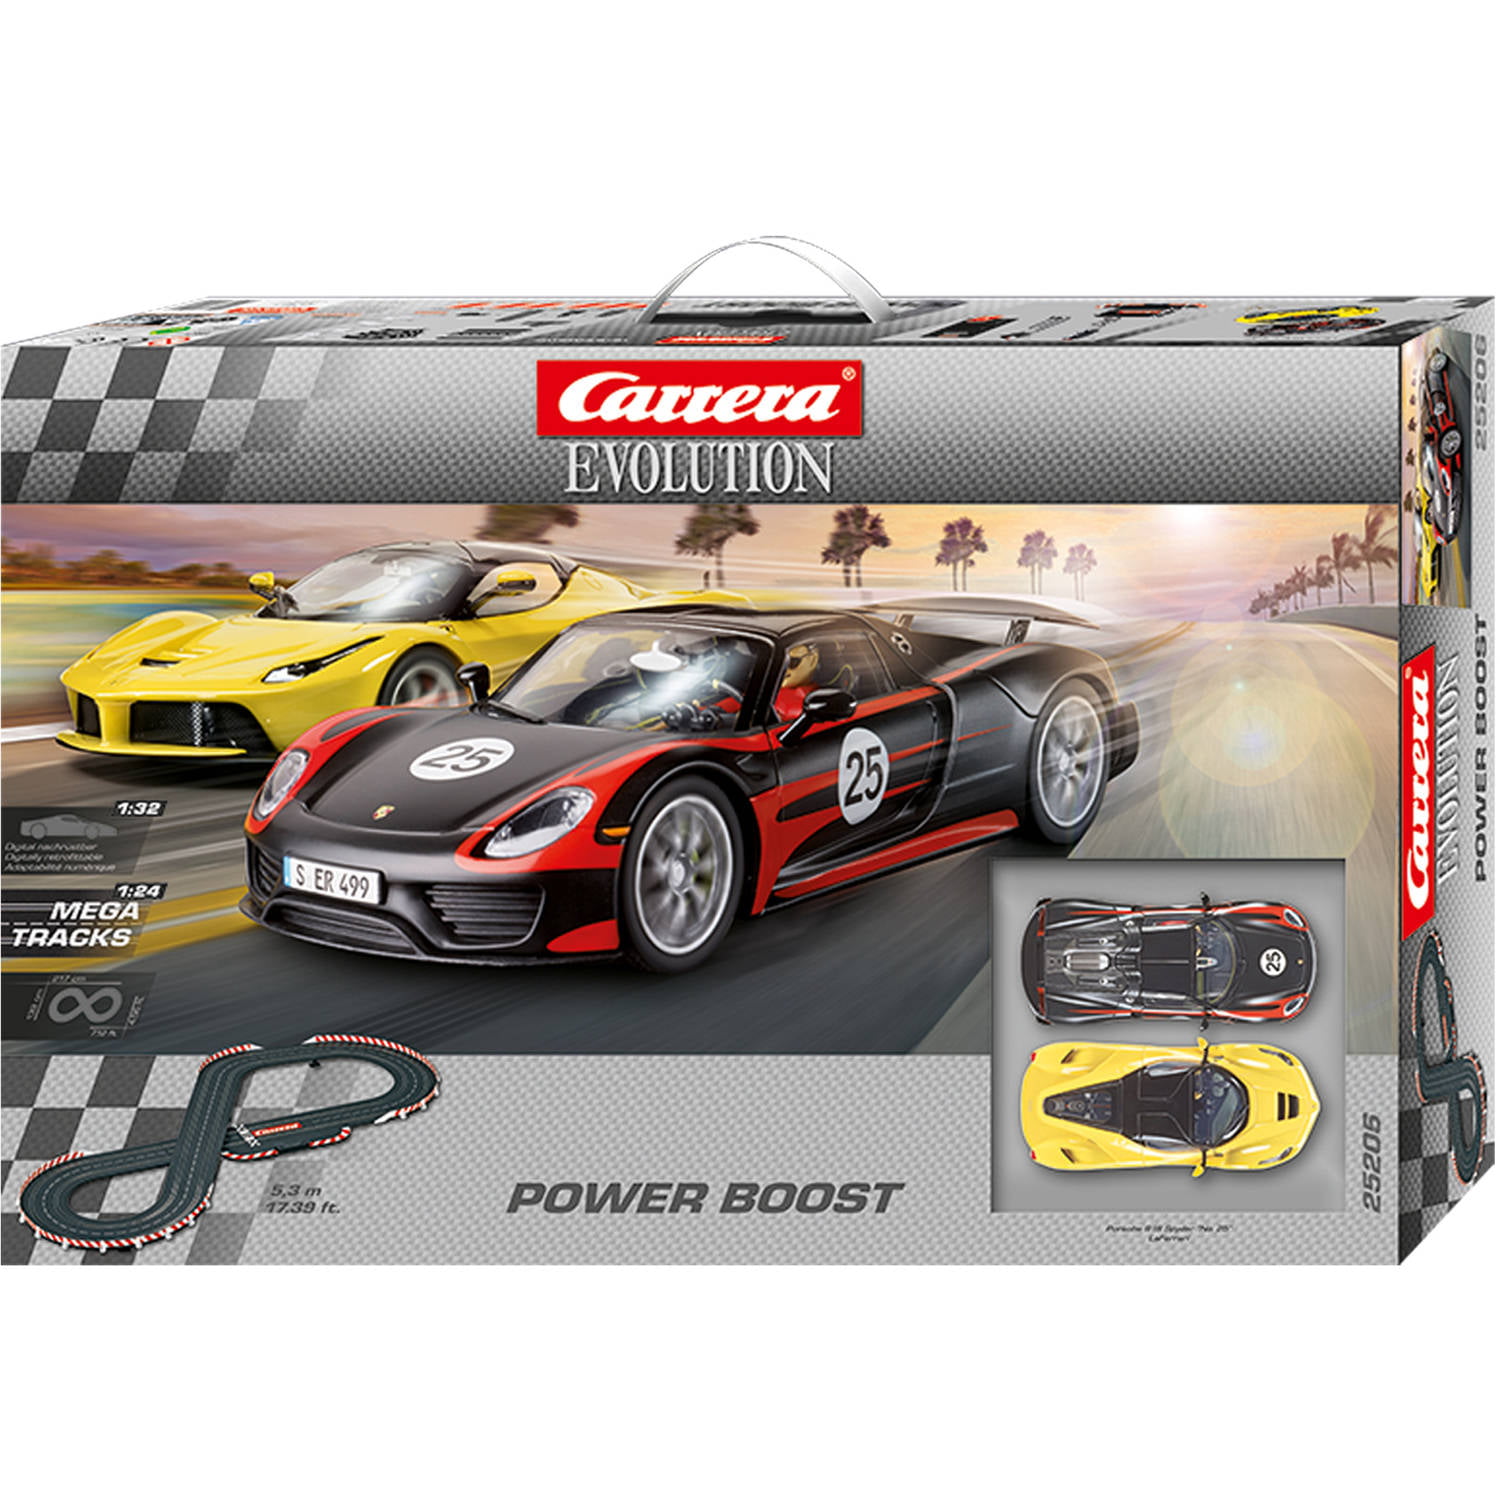 Carrera Power Boost Evolution 1:32 Scale Slot Car Race Set 